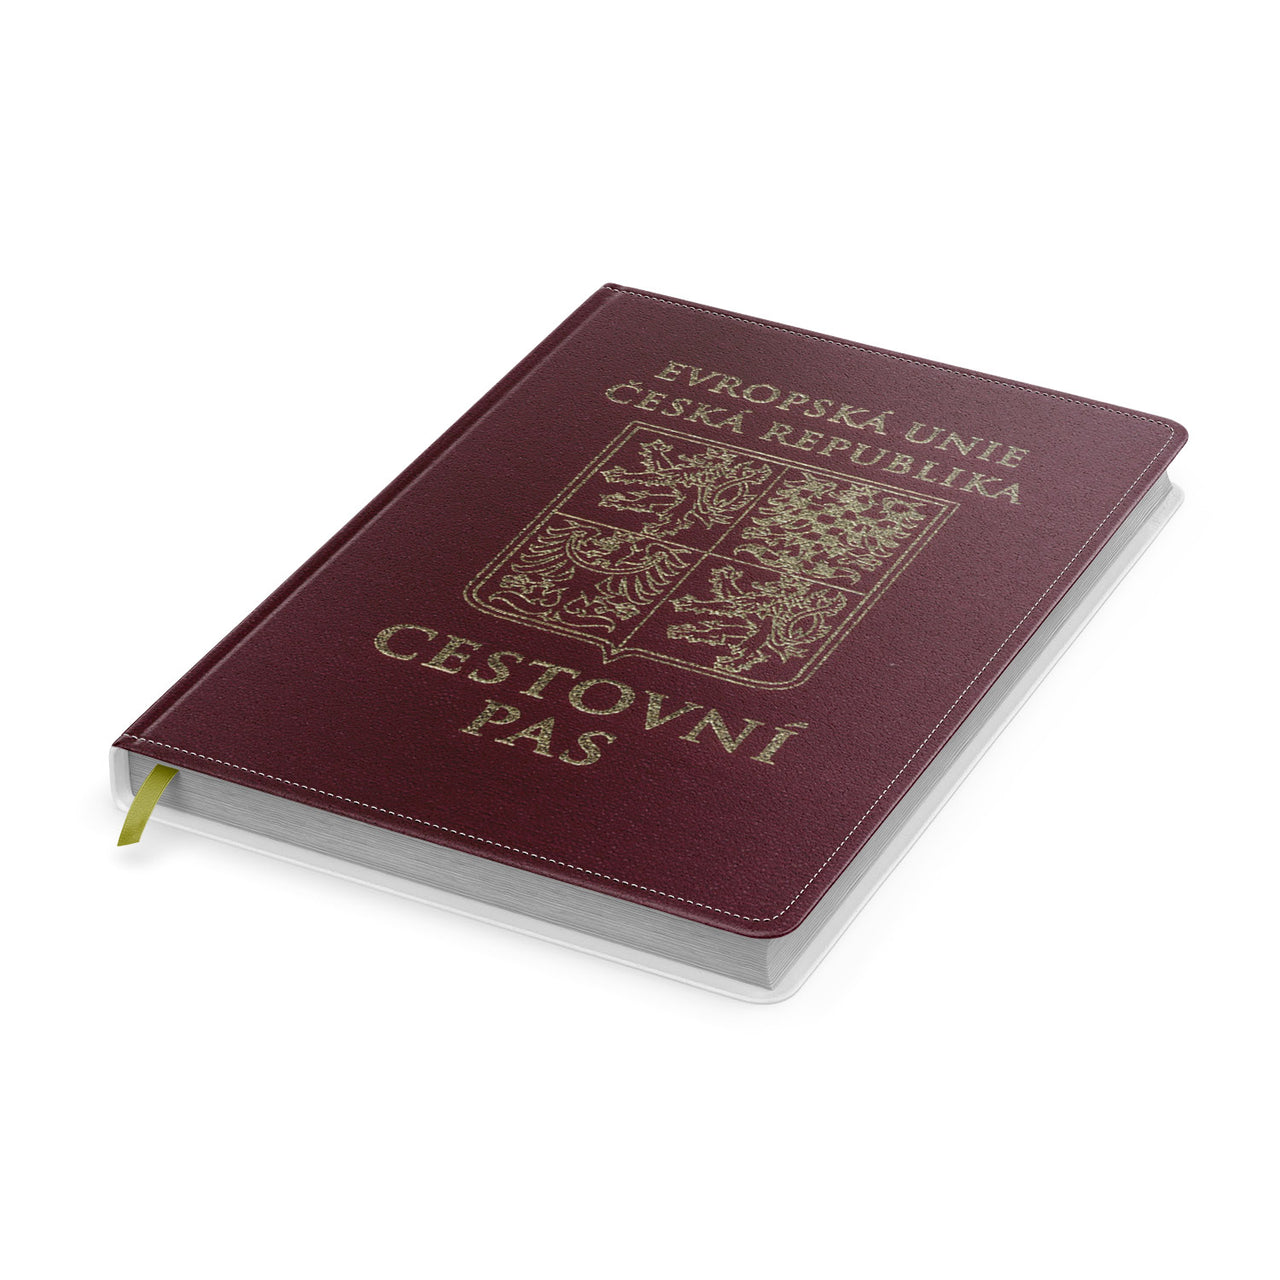 Czech Republic (Czechia) Passport Designed Notebooks